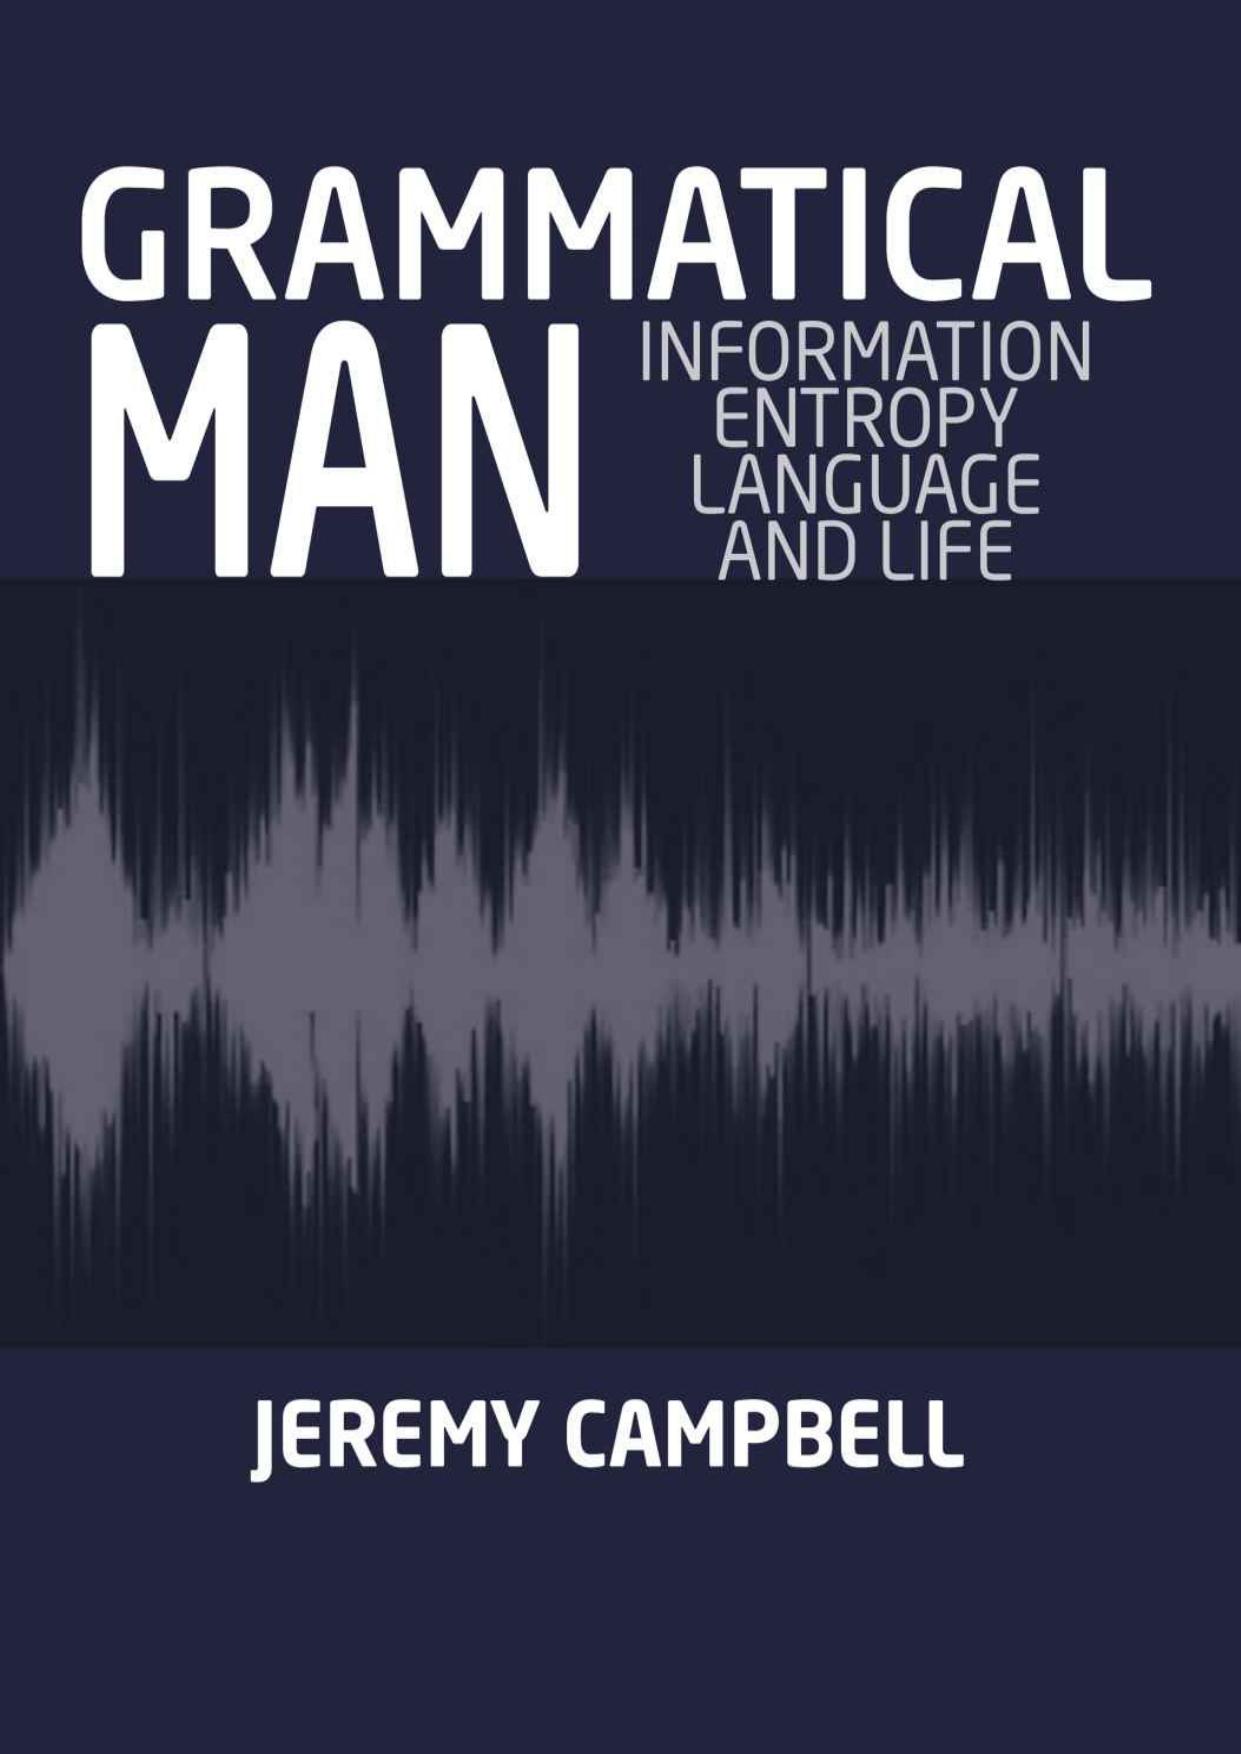 Grammatical Man: Information, Entropy, Language, and Life